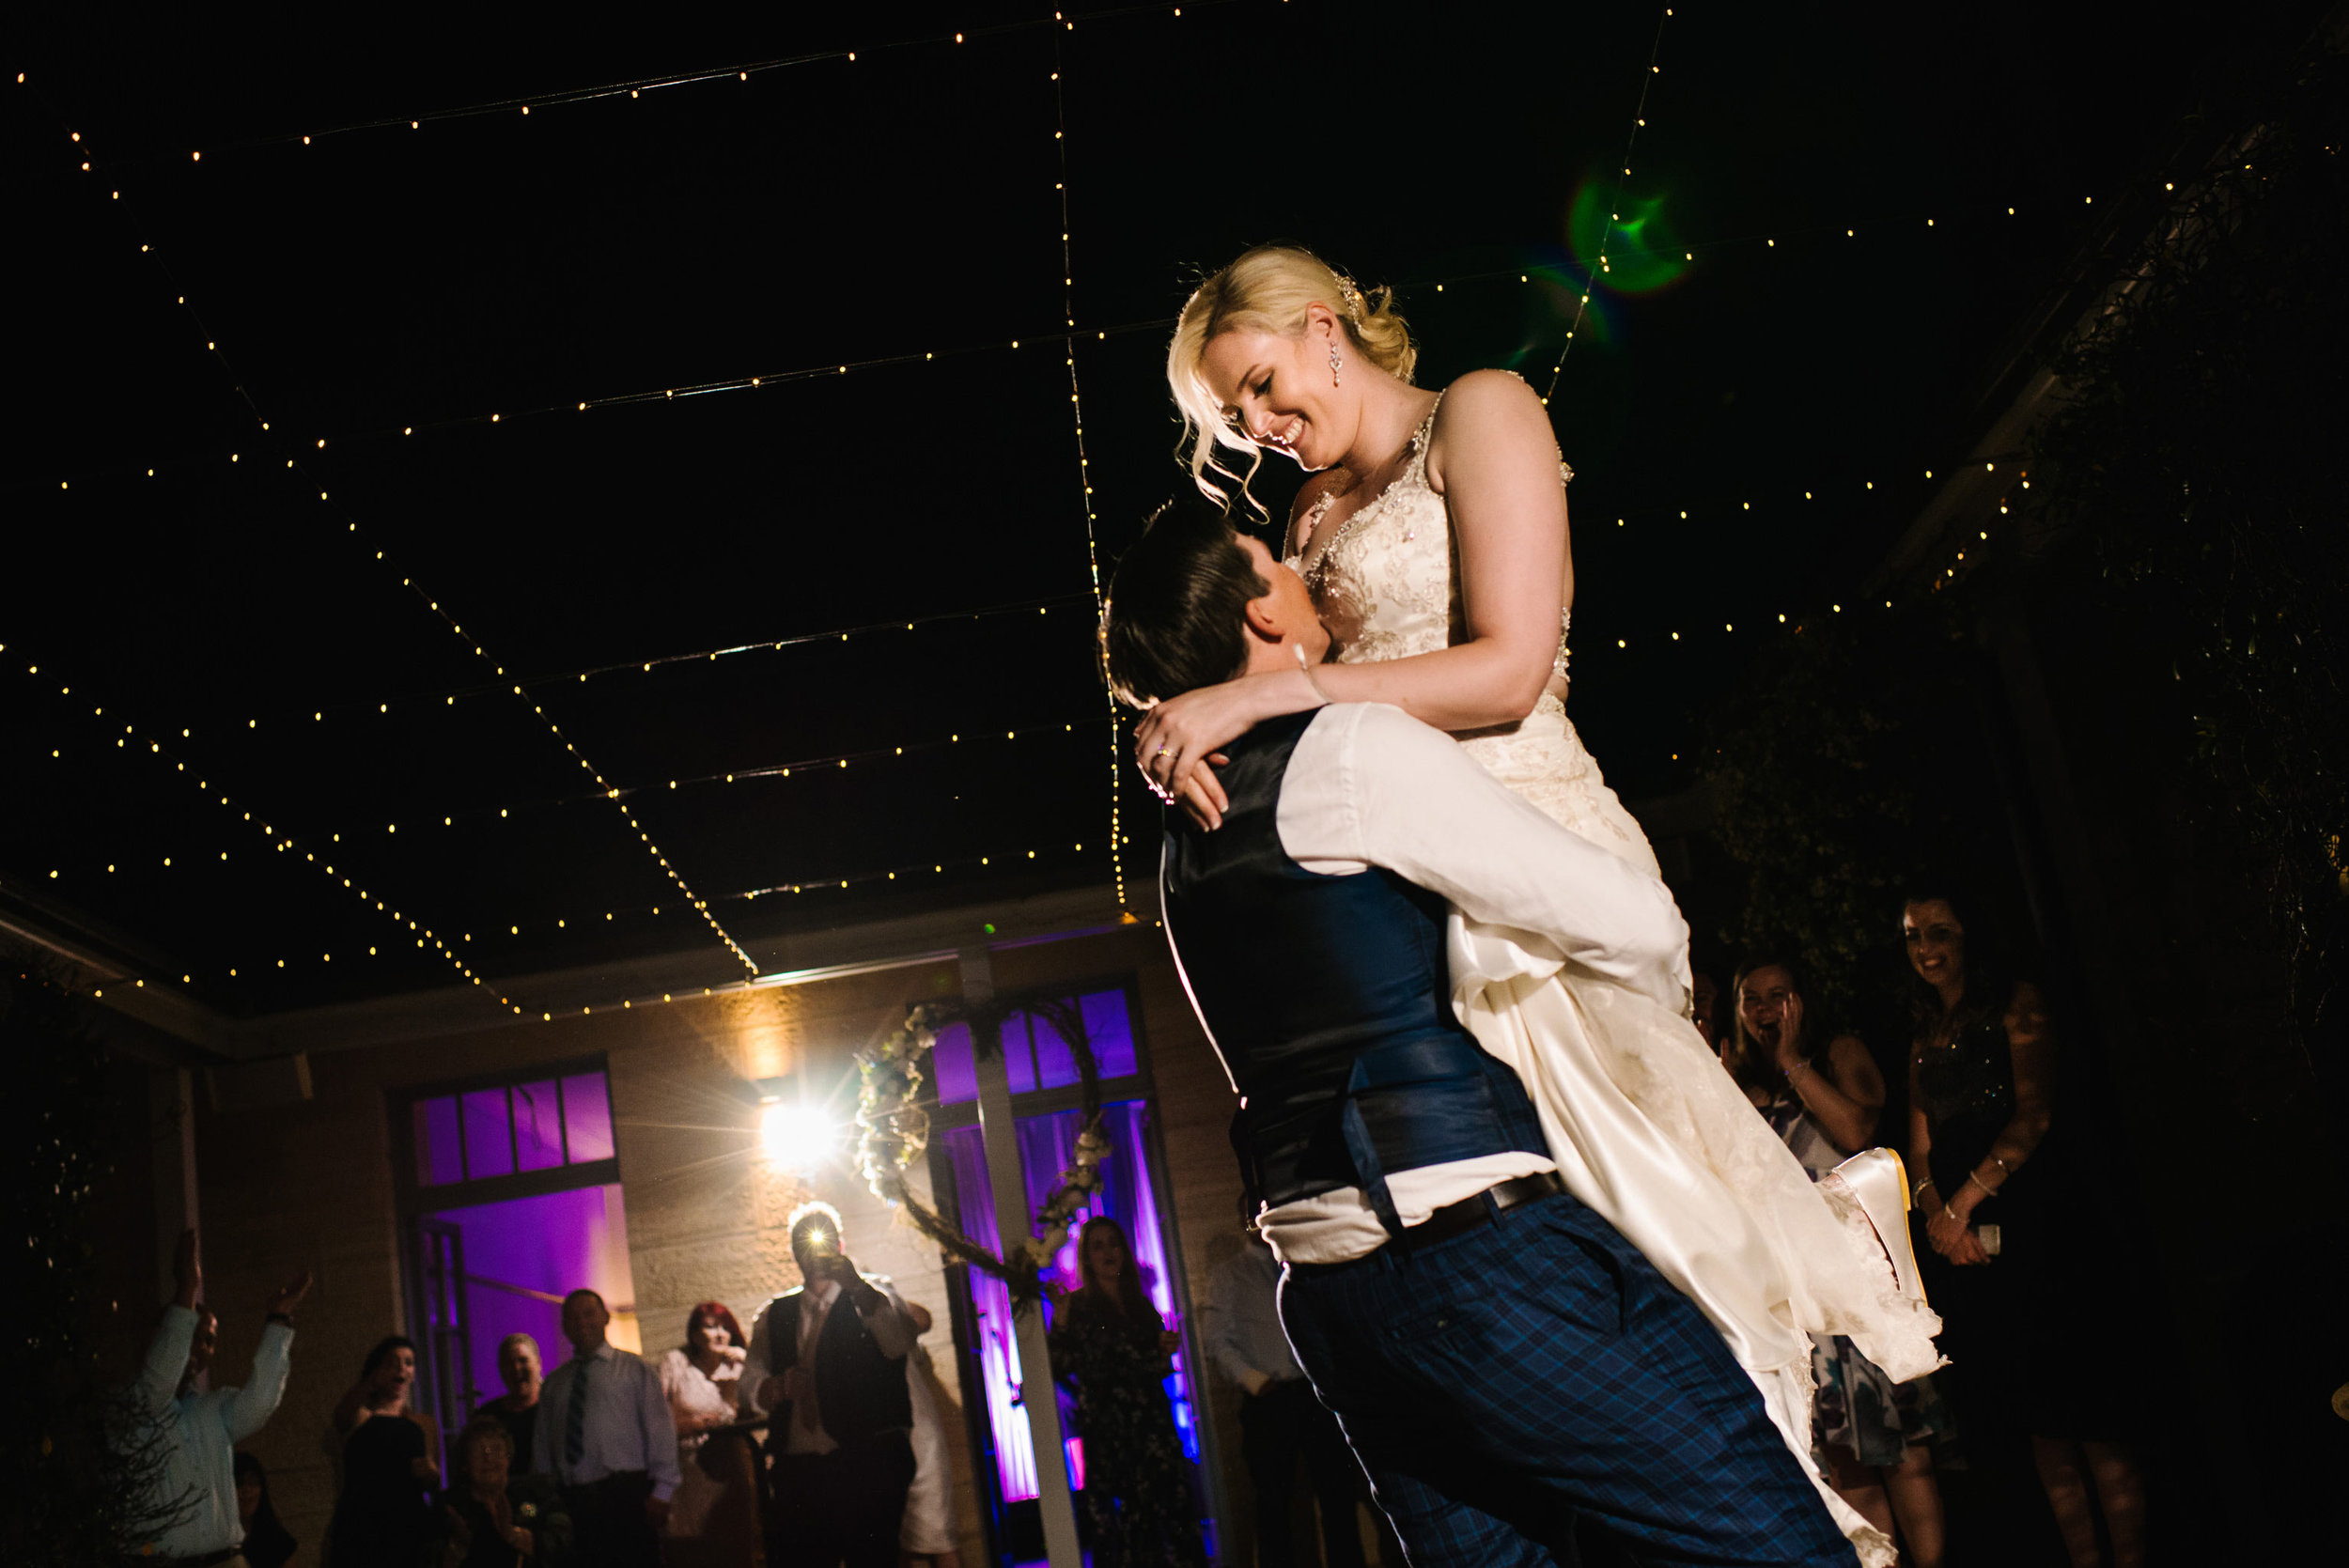 Groom lifts bride during first dance at Gunner's Barracks wedding reception